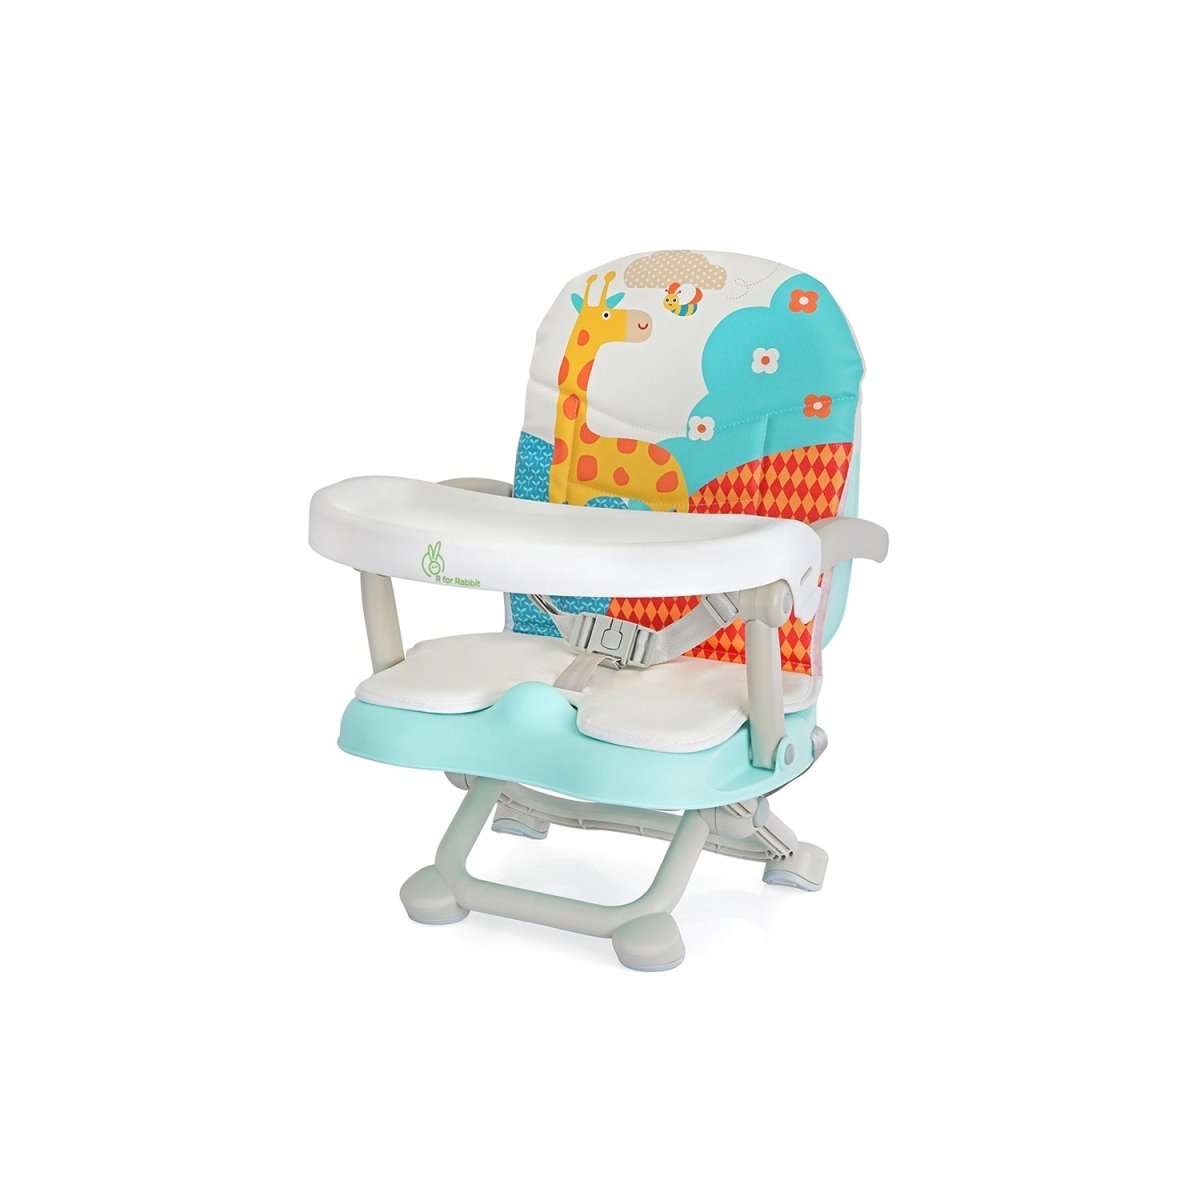 R for Rabbit Candy Pop- The Stylish Booster Chair- Aqua Blue - BOCPAB1